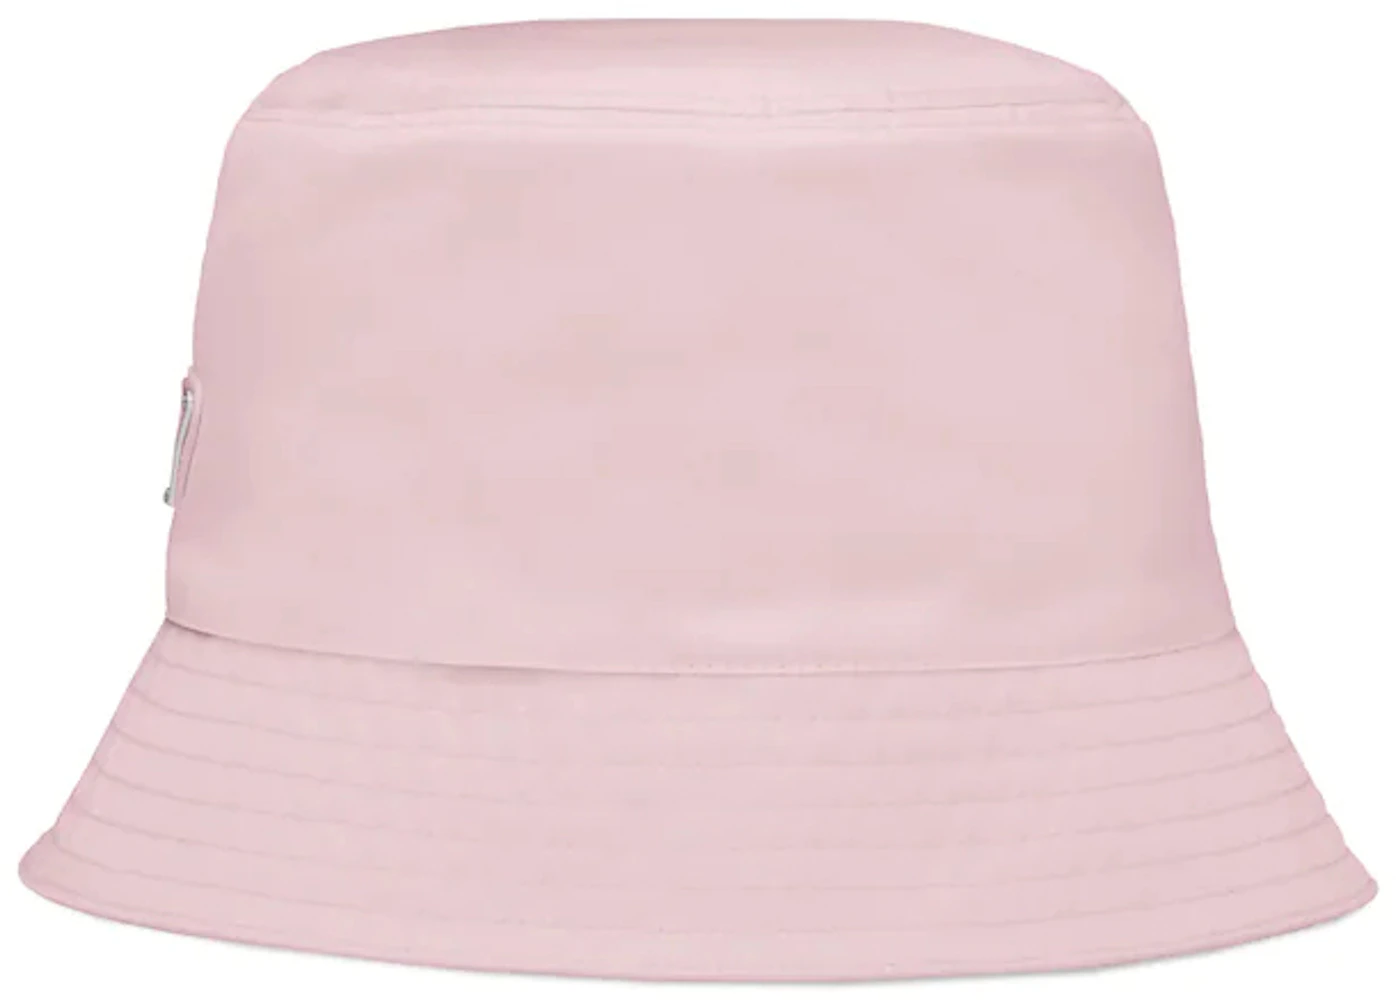 Re-Nylon bucket hat